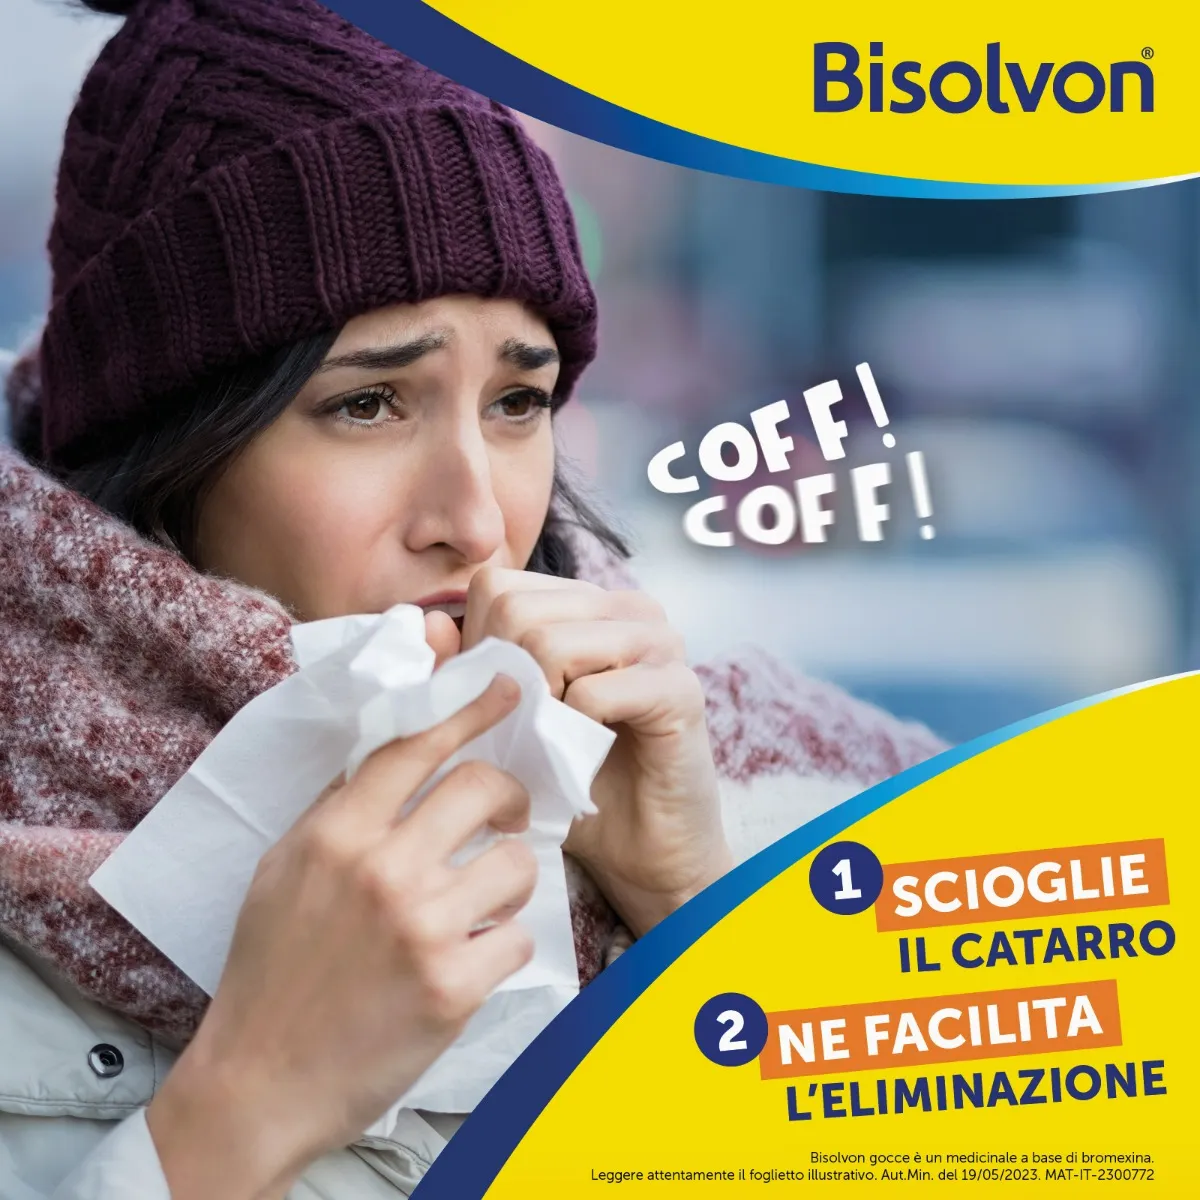 Bisolvon Gocce Orali 2 mg/ml 40 ml Bromexina Cloridrato